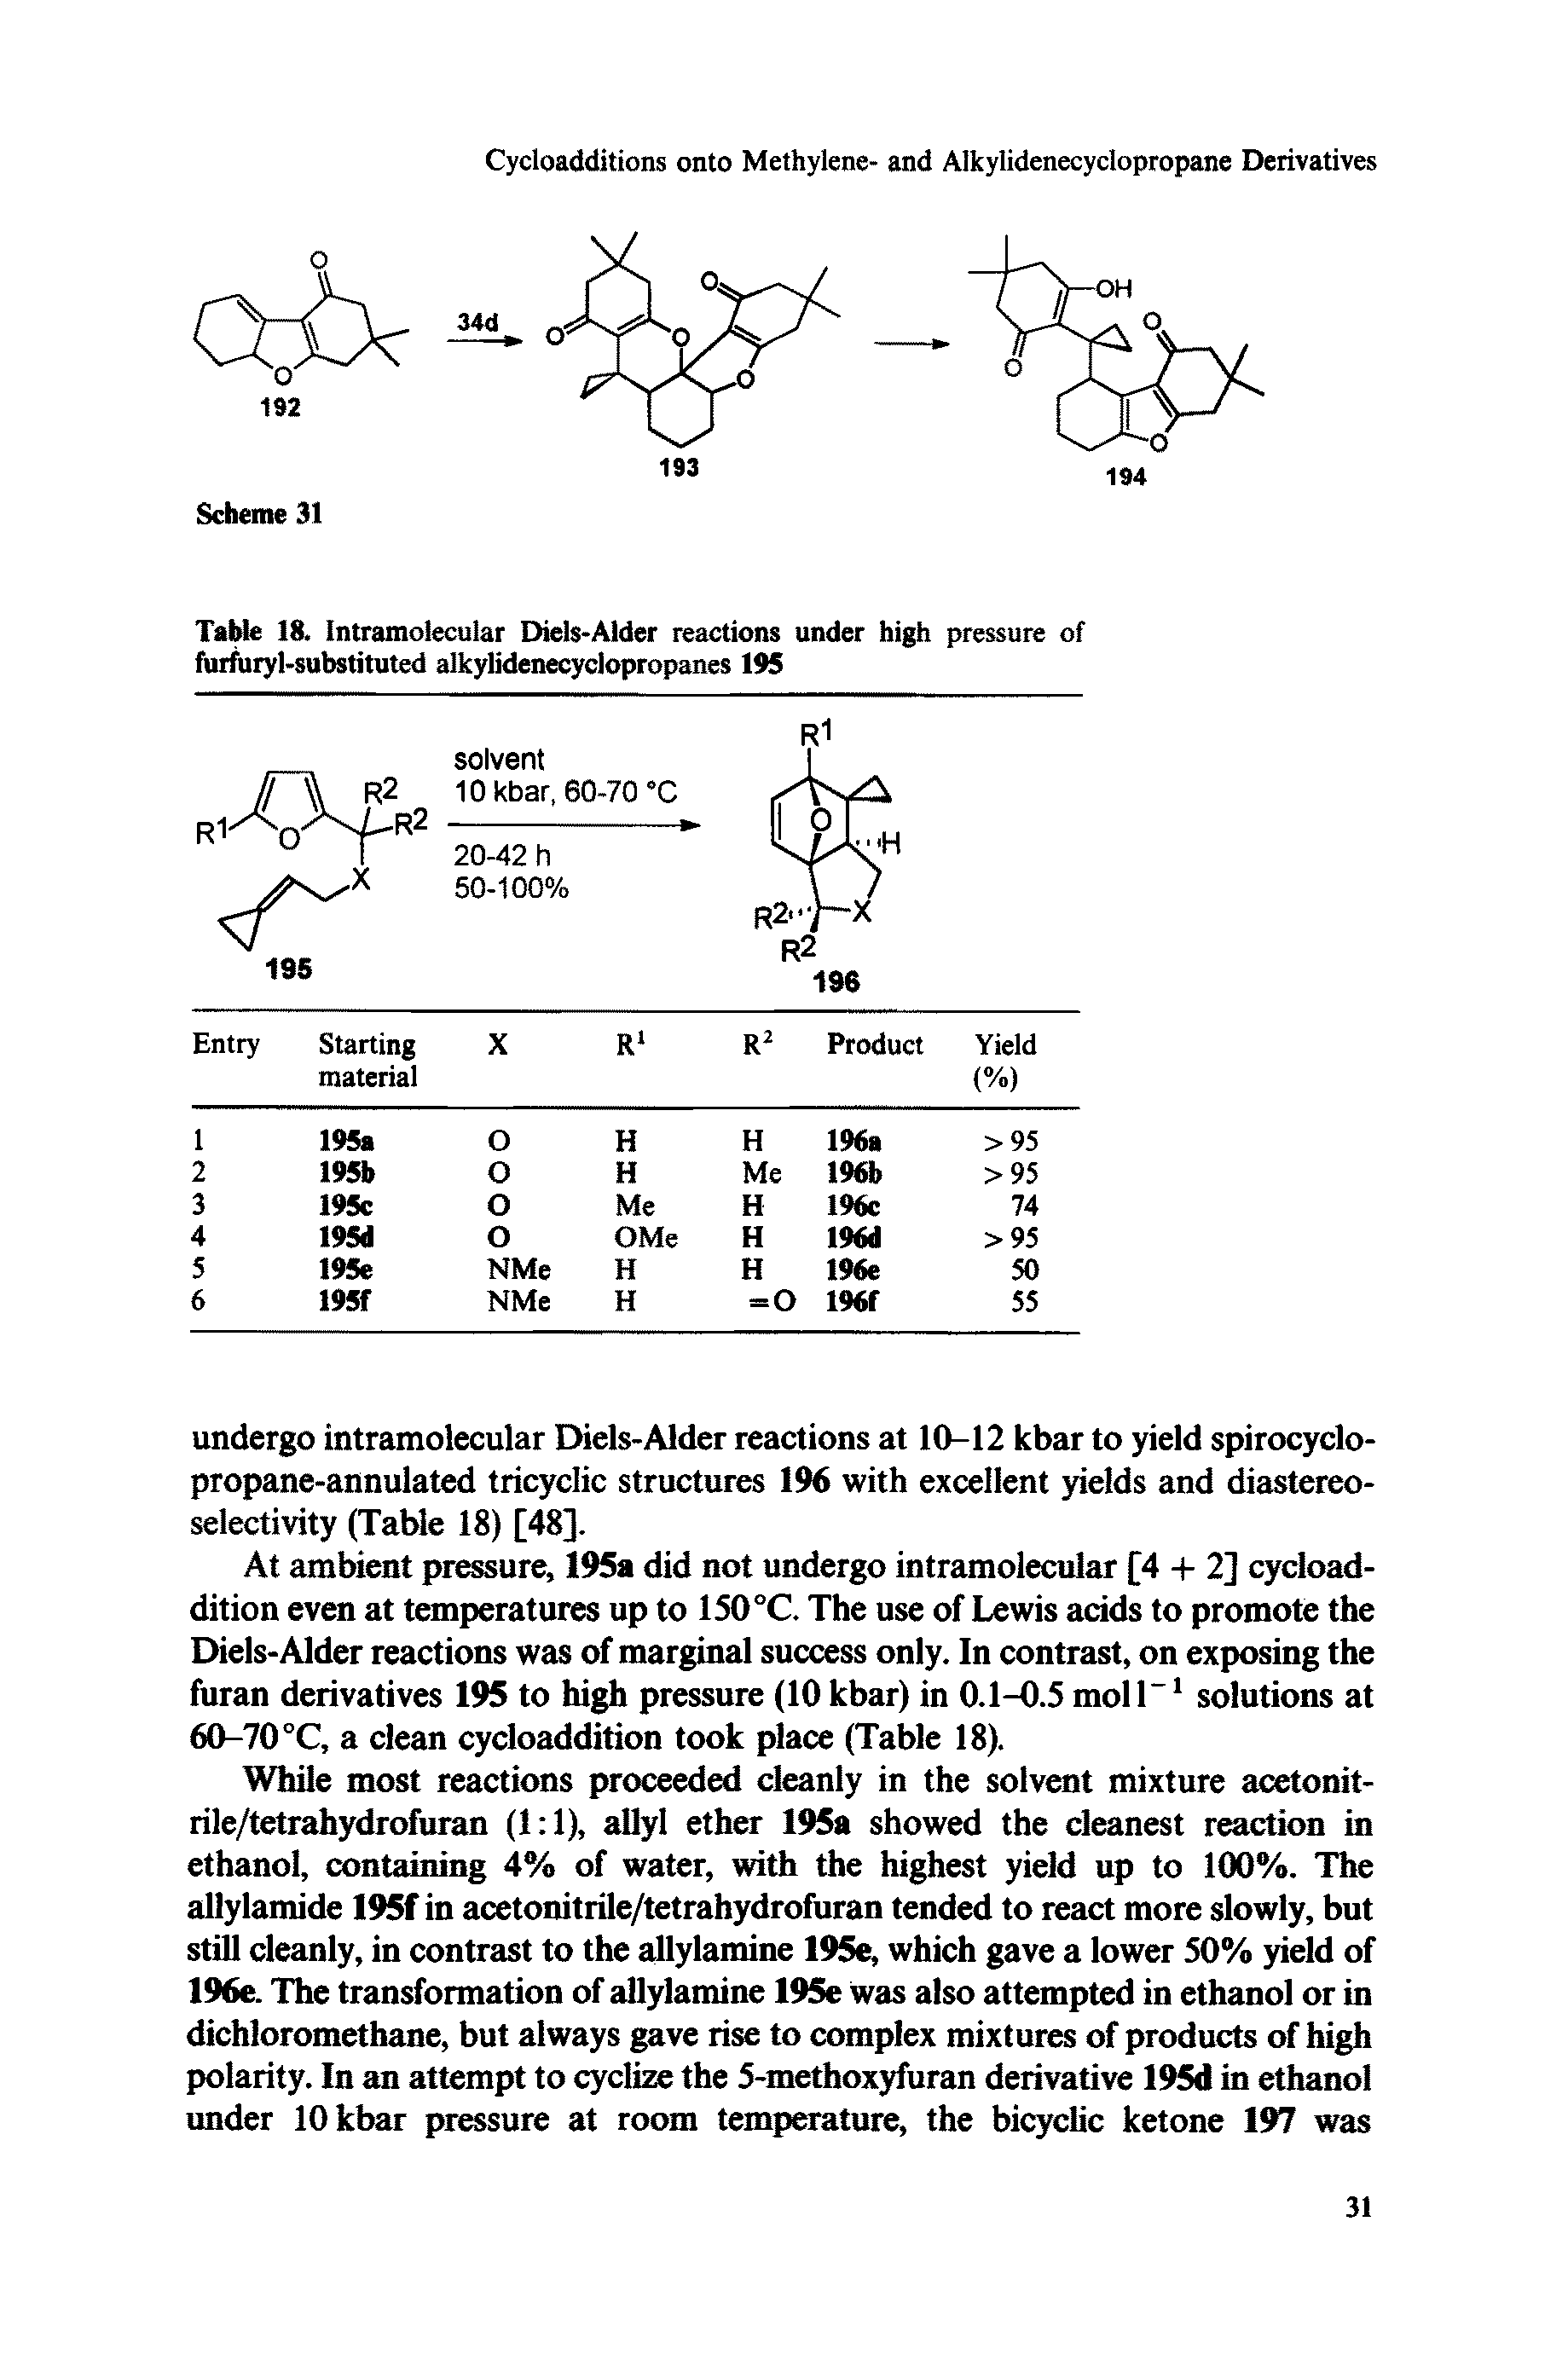 Table 18. Intramolecular Diels-Alder reactions under high pressure of furfuryl-substituted alkylidenecyclopropanes 195...